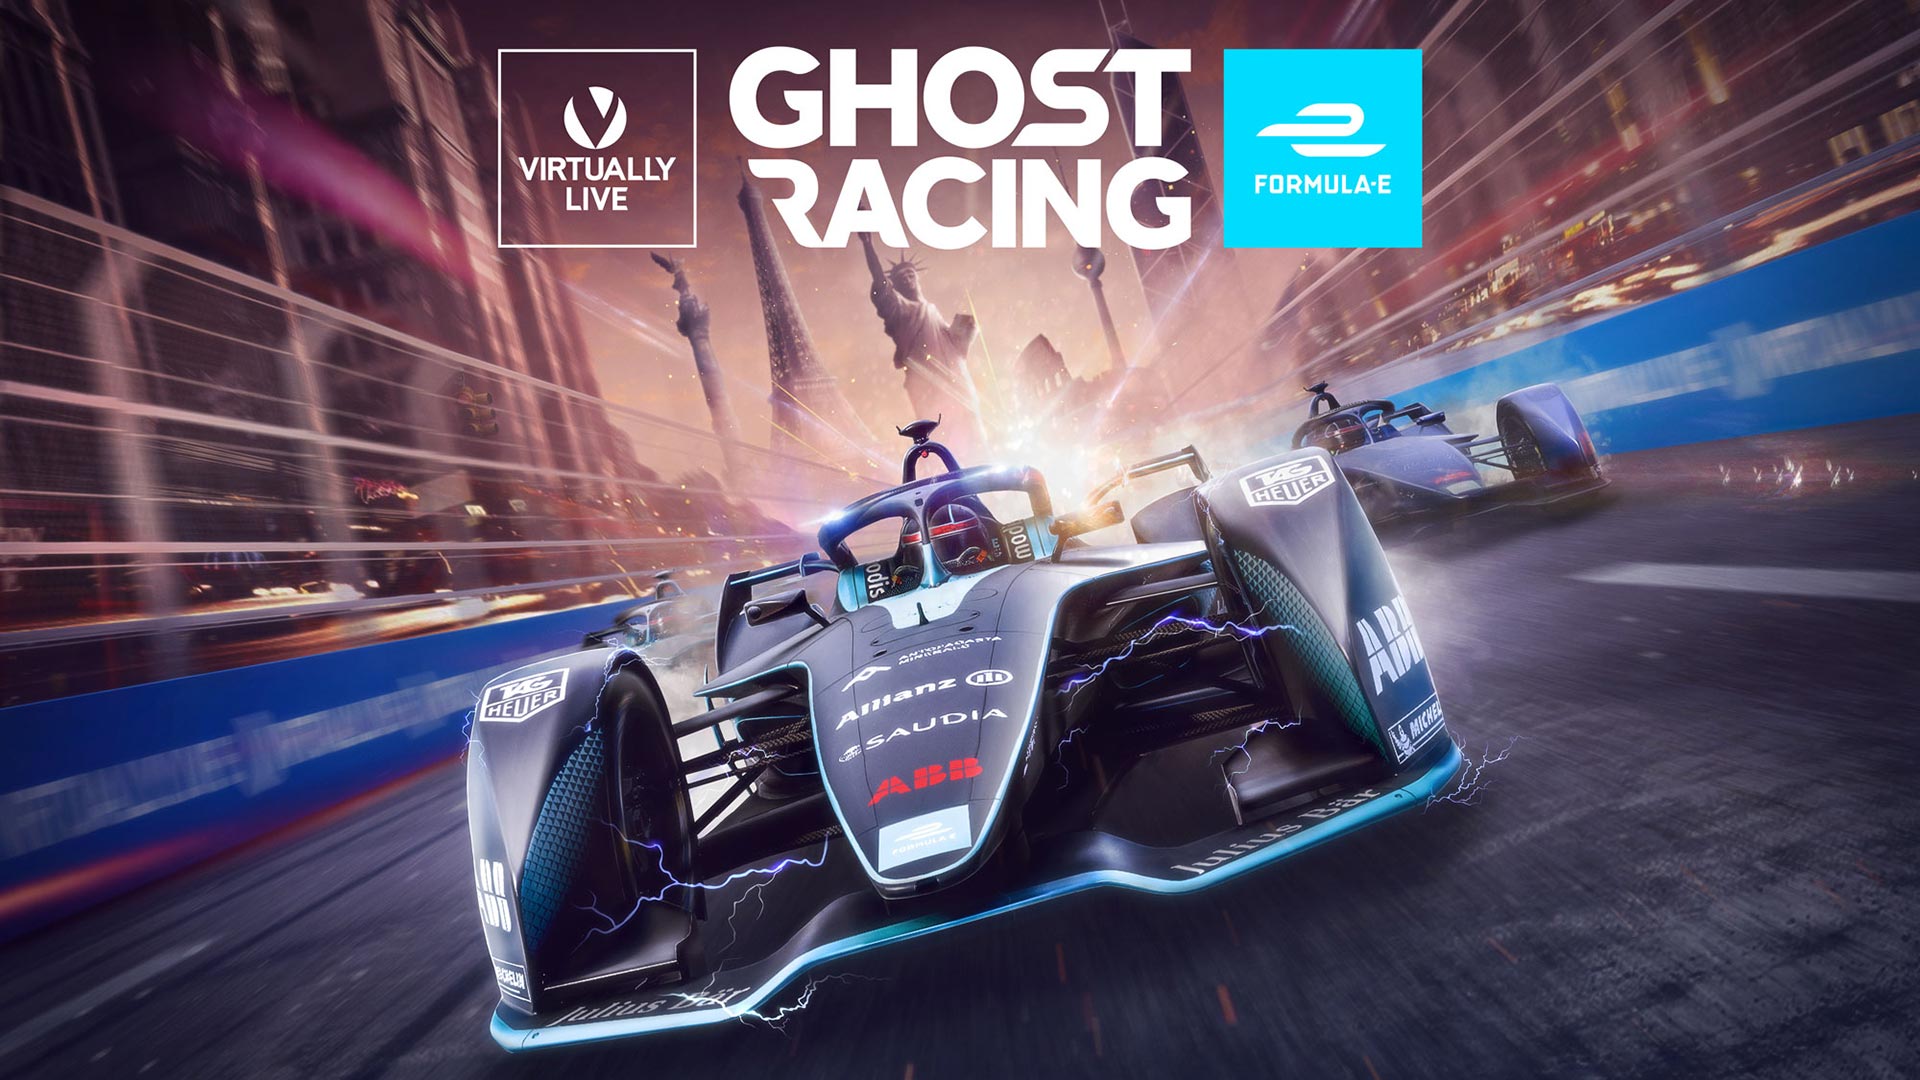 Formula E Virtually Live Ghost Racing